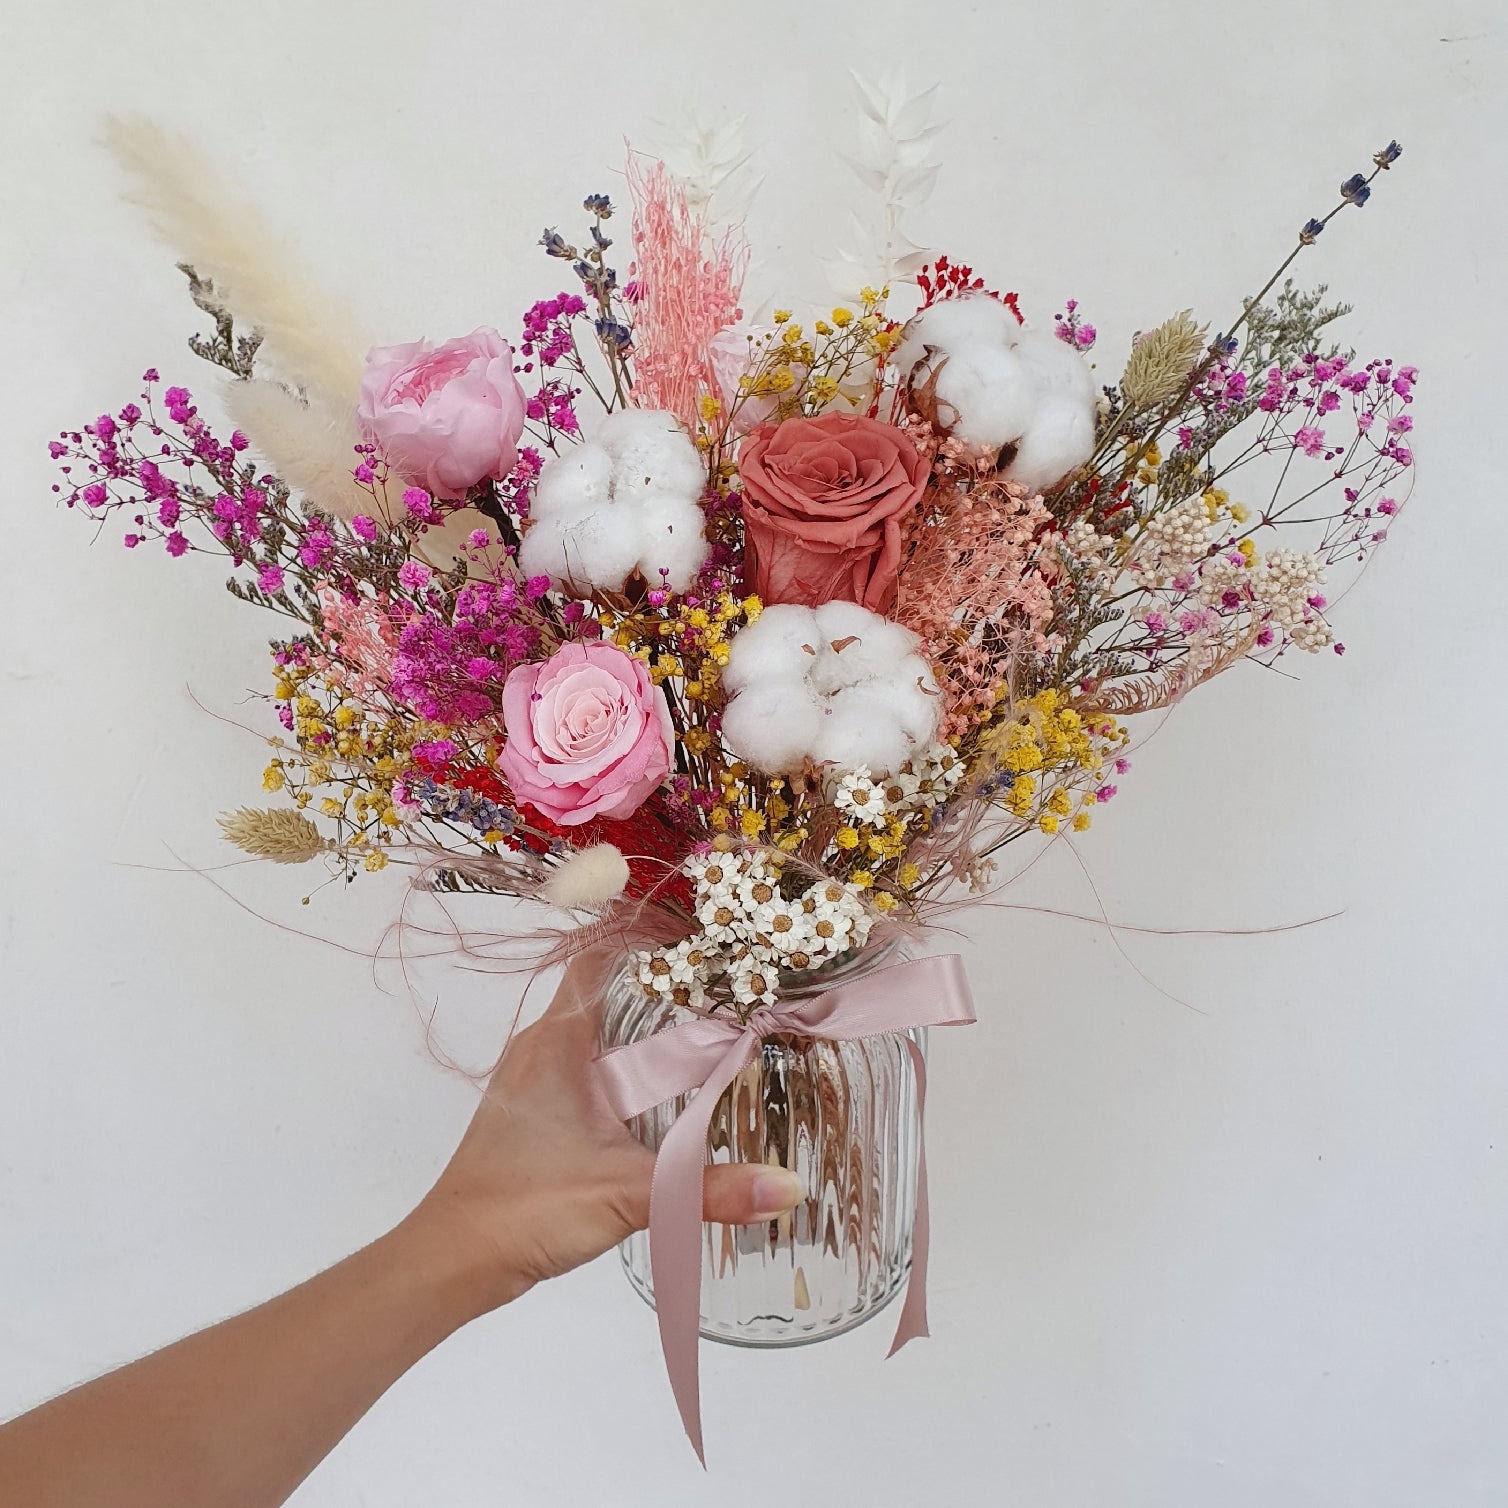 DIY Flower Kit - Happy Florals